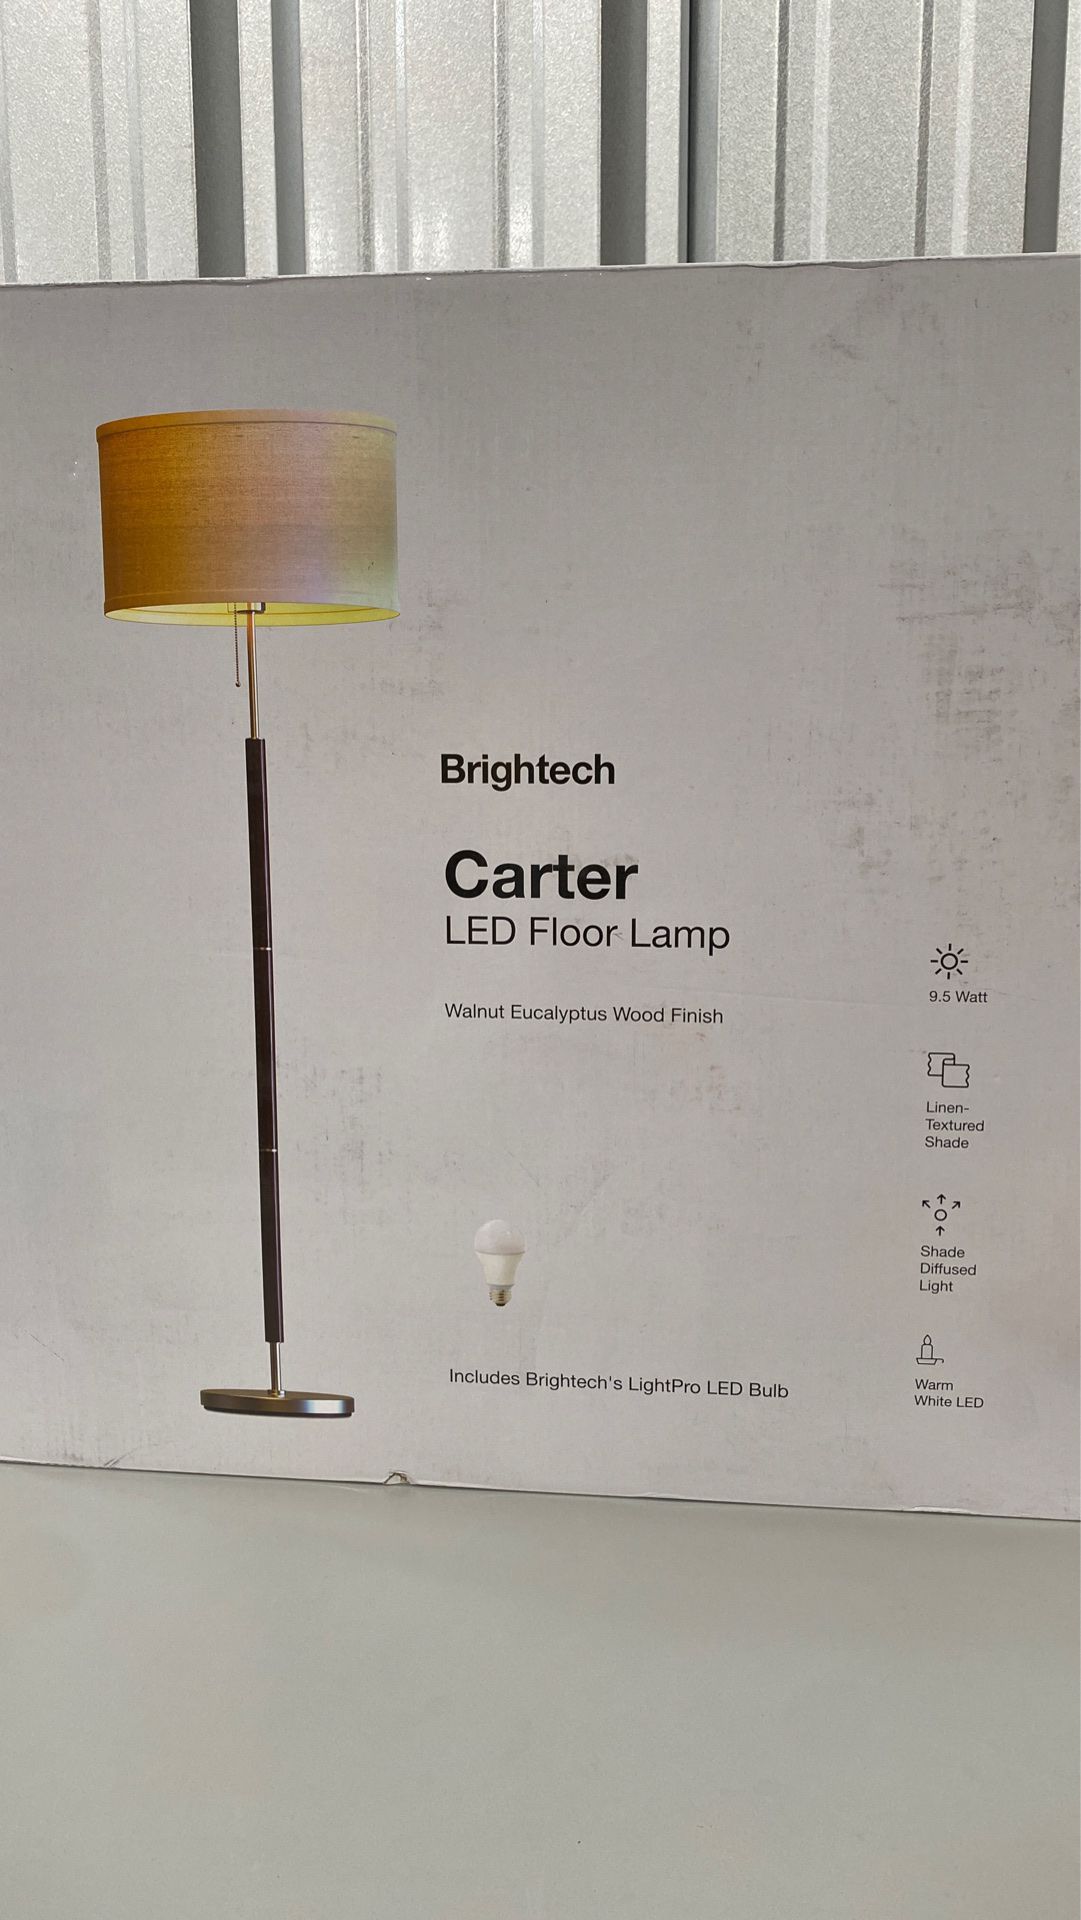 Brightech Carter LED Floor Lamp